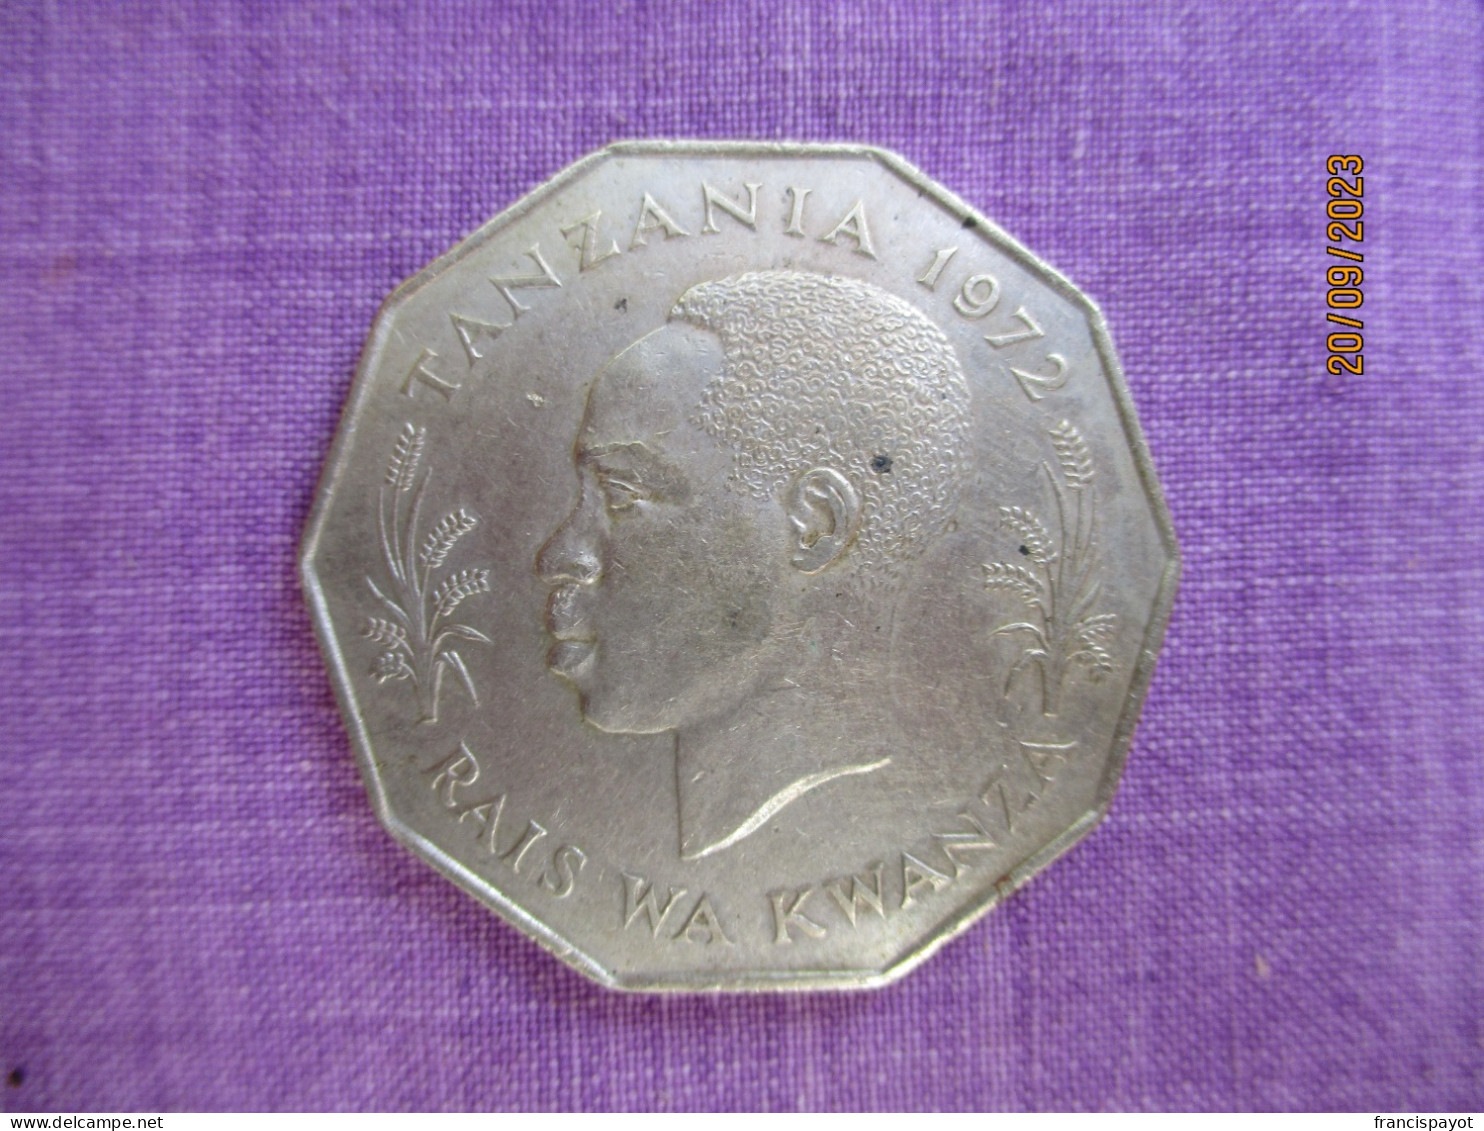 Tanzania: 5 Shillings 1972 - Tansania